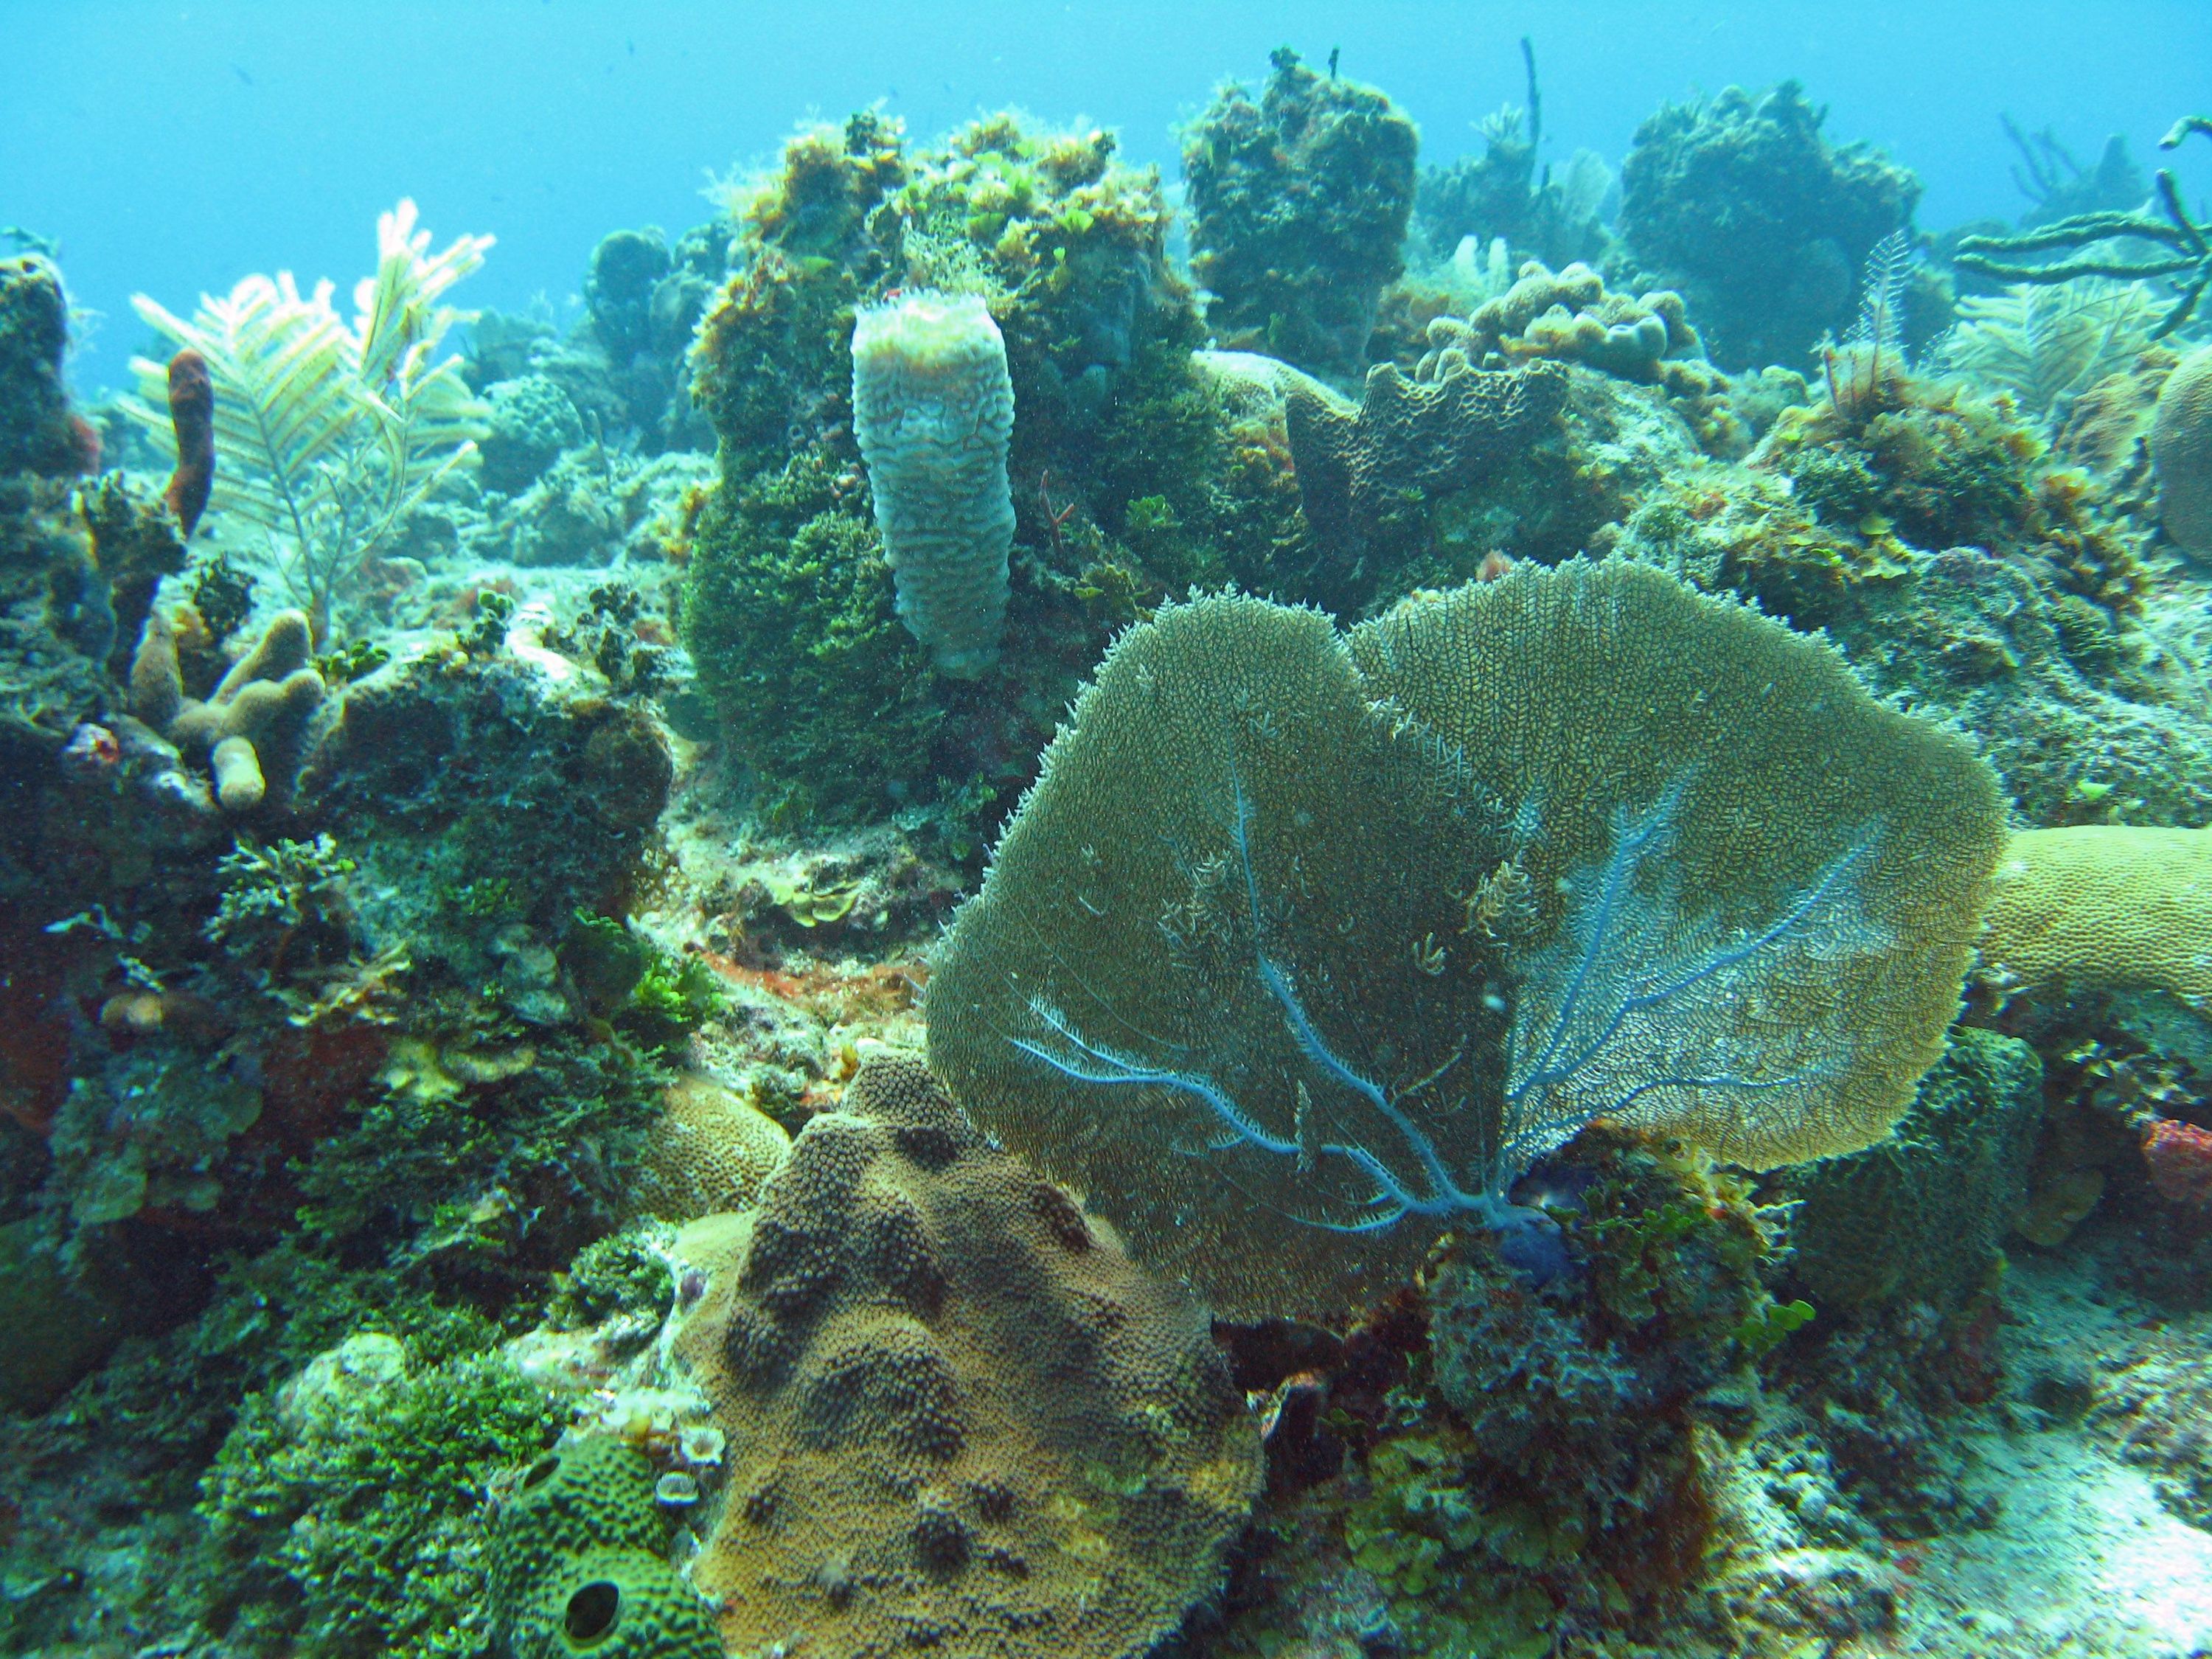 Reef Scene of Soft Corals